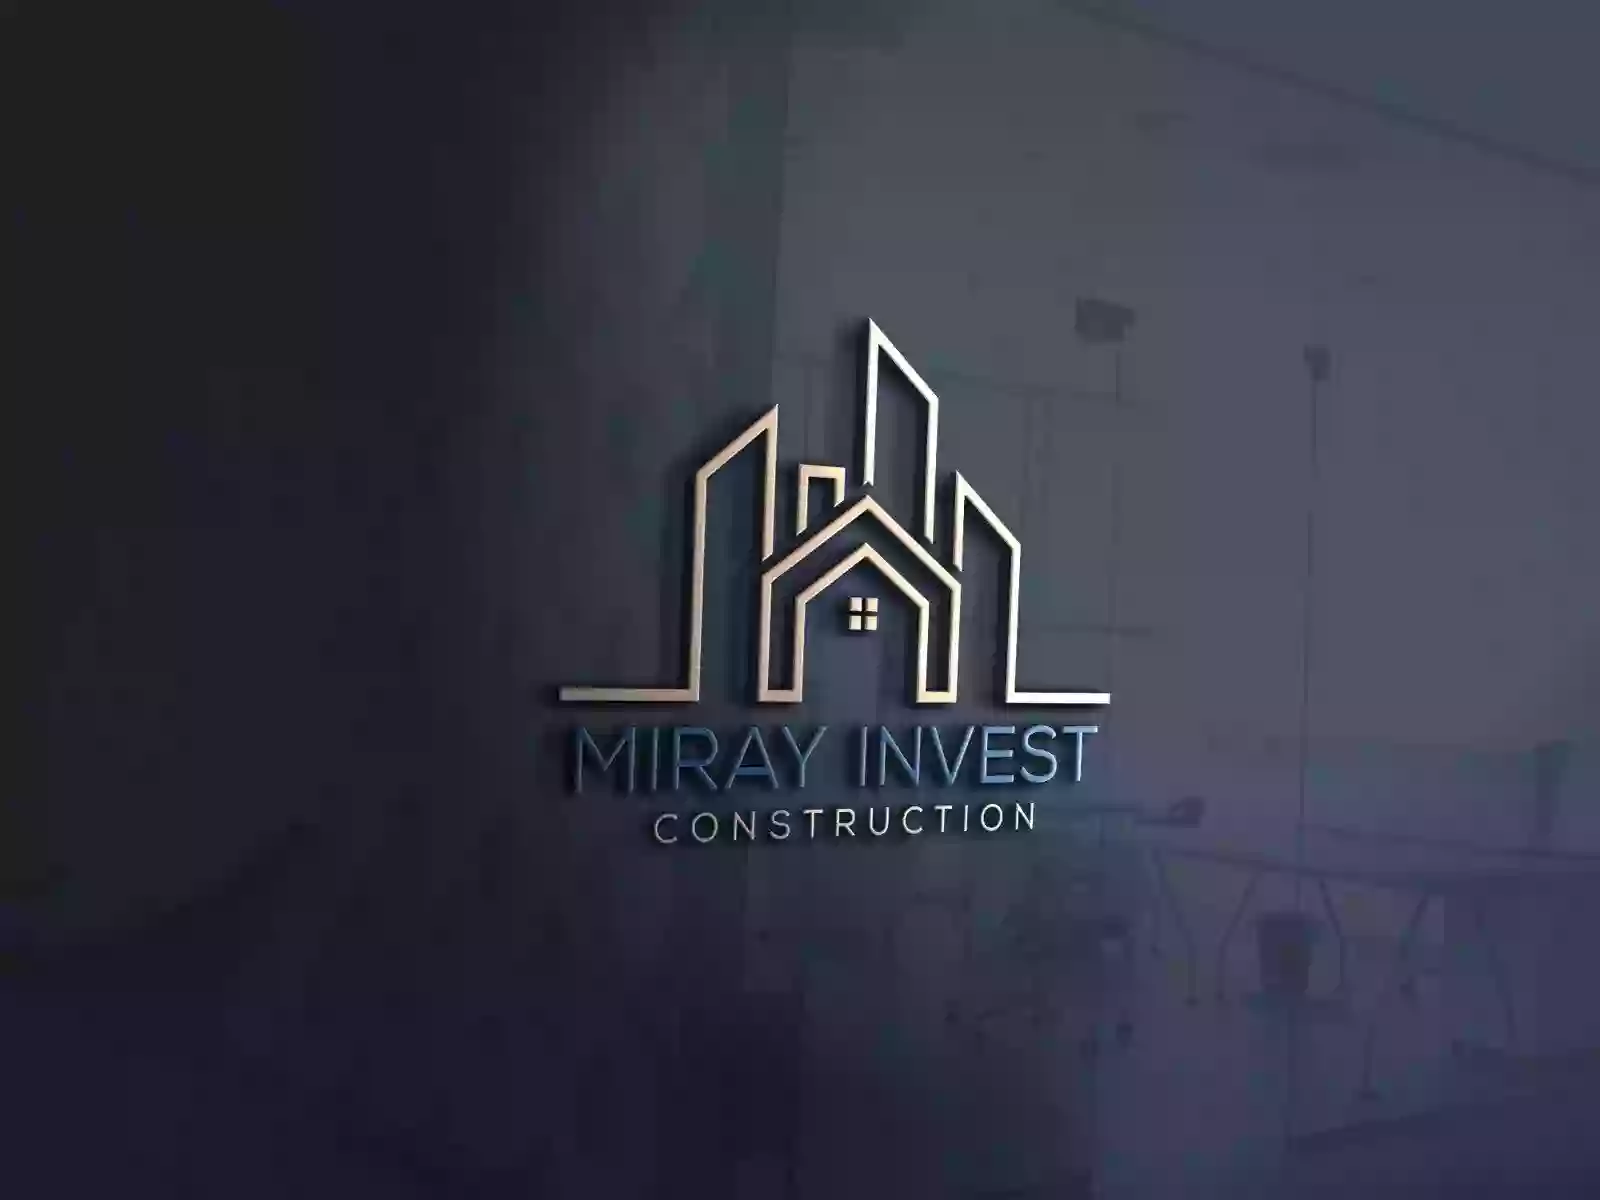 Miray Invest